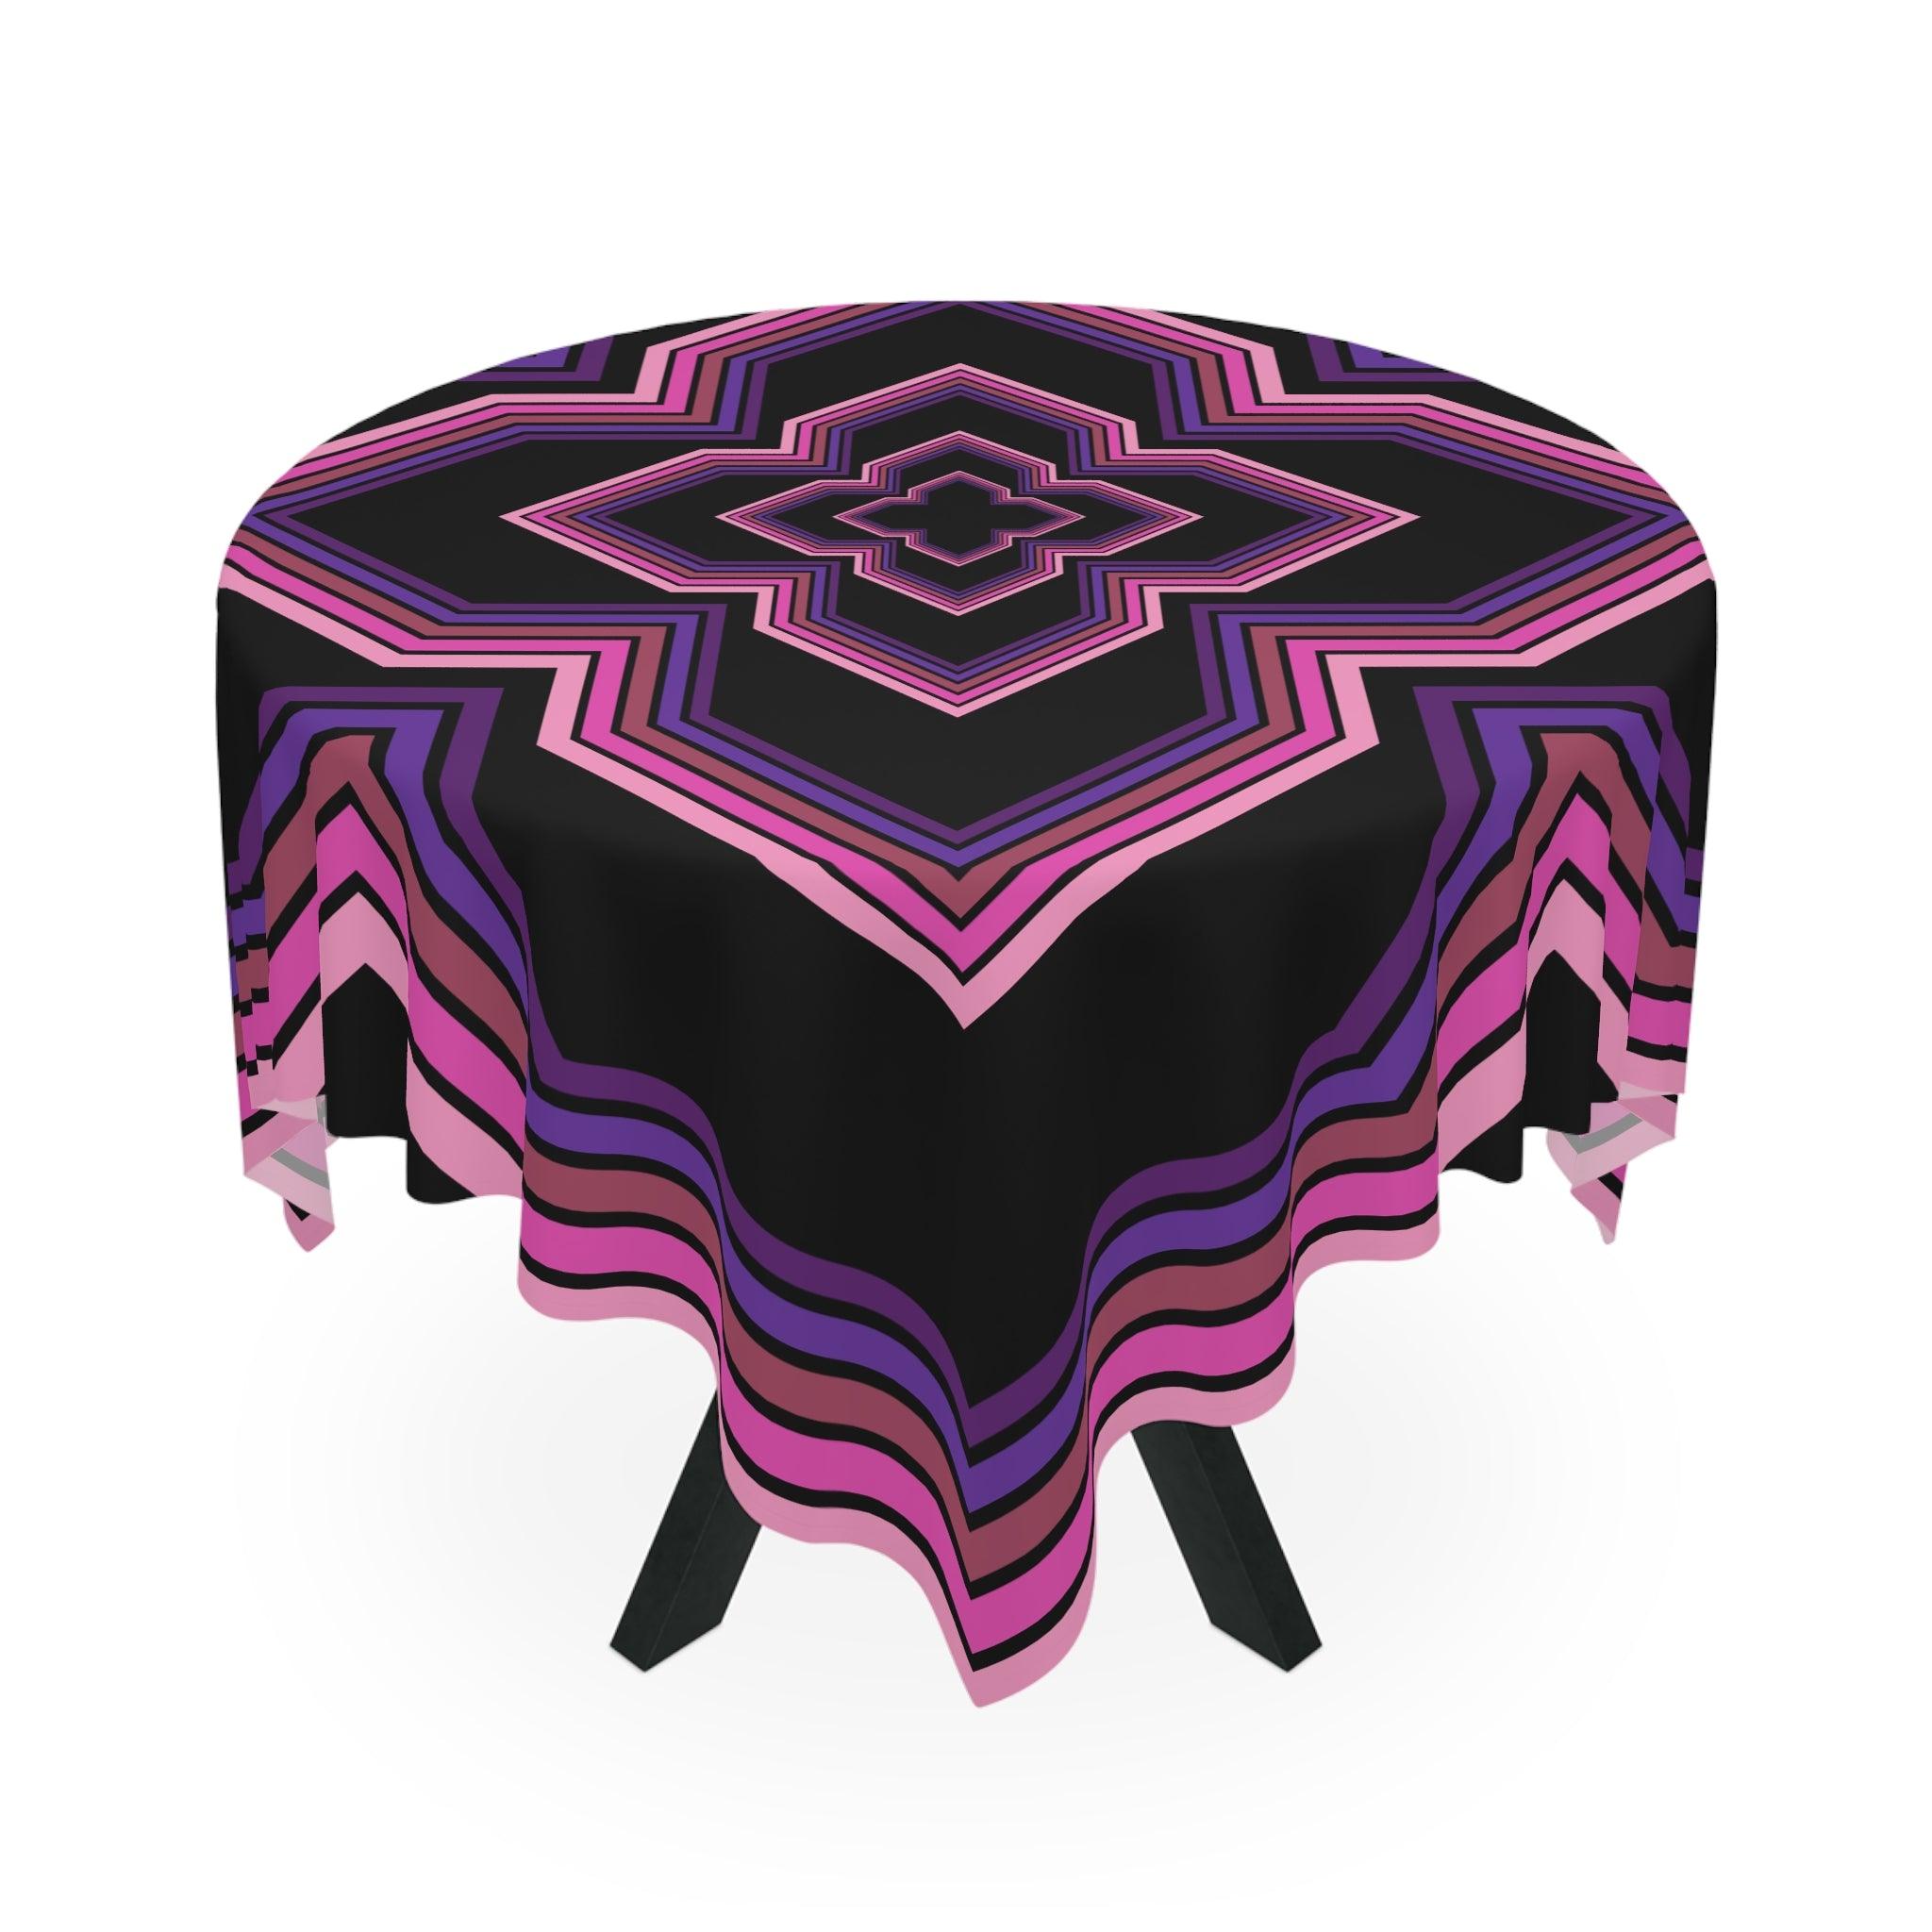 Retro 80s 90s Vaporwave Aesthetic Pink, Purple & Black Tablecloth | lovevisionkarma.com